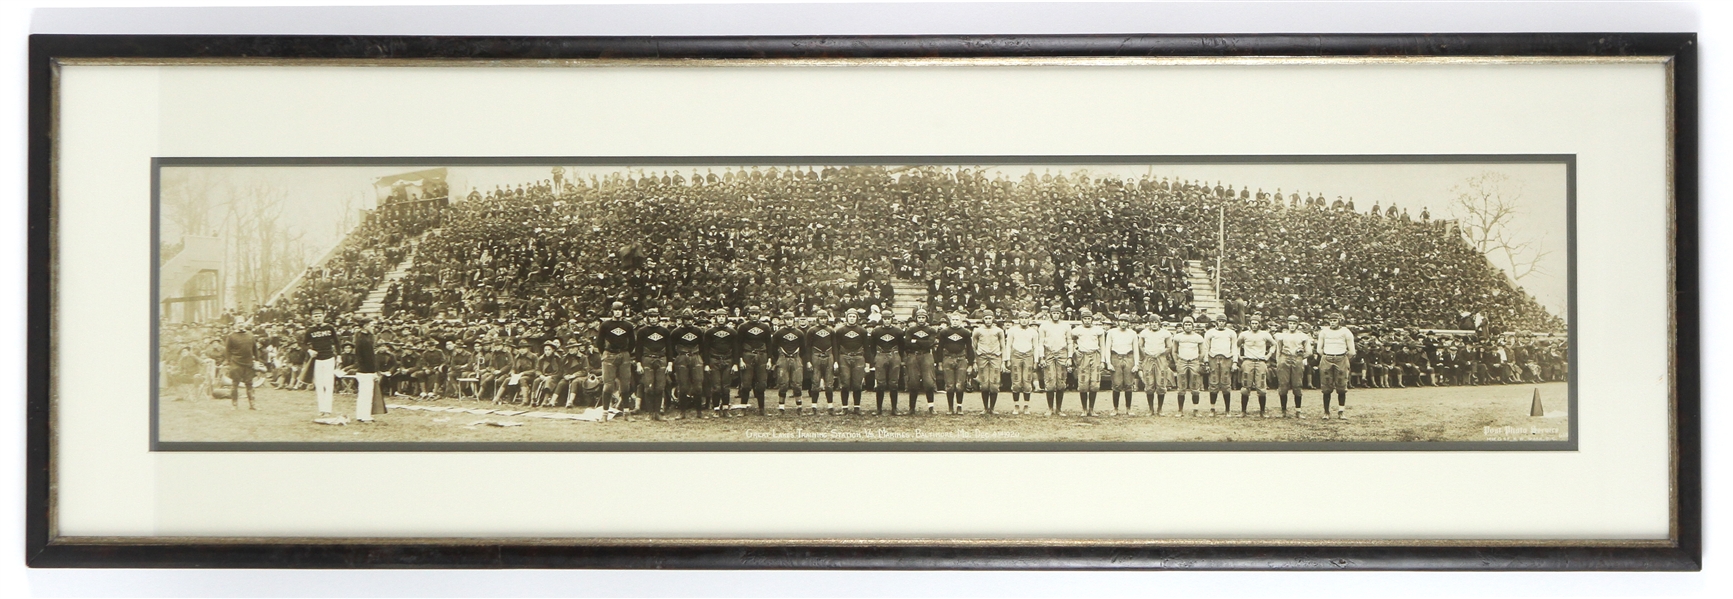 1920 Great Lakes Training Station vs Marines 14"x 43" Framed Yard Long Panoramic Photo 